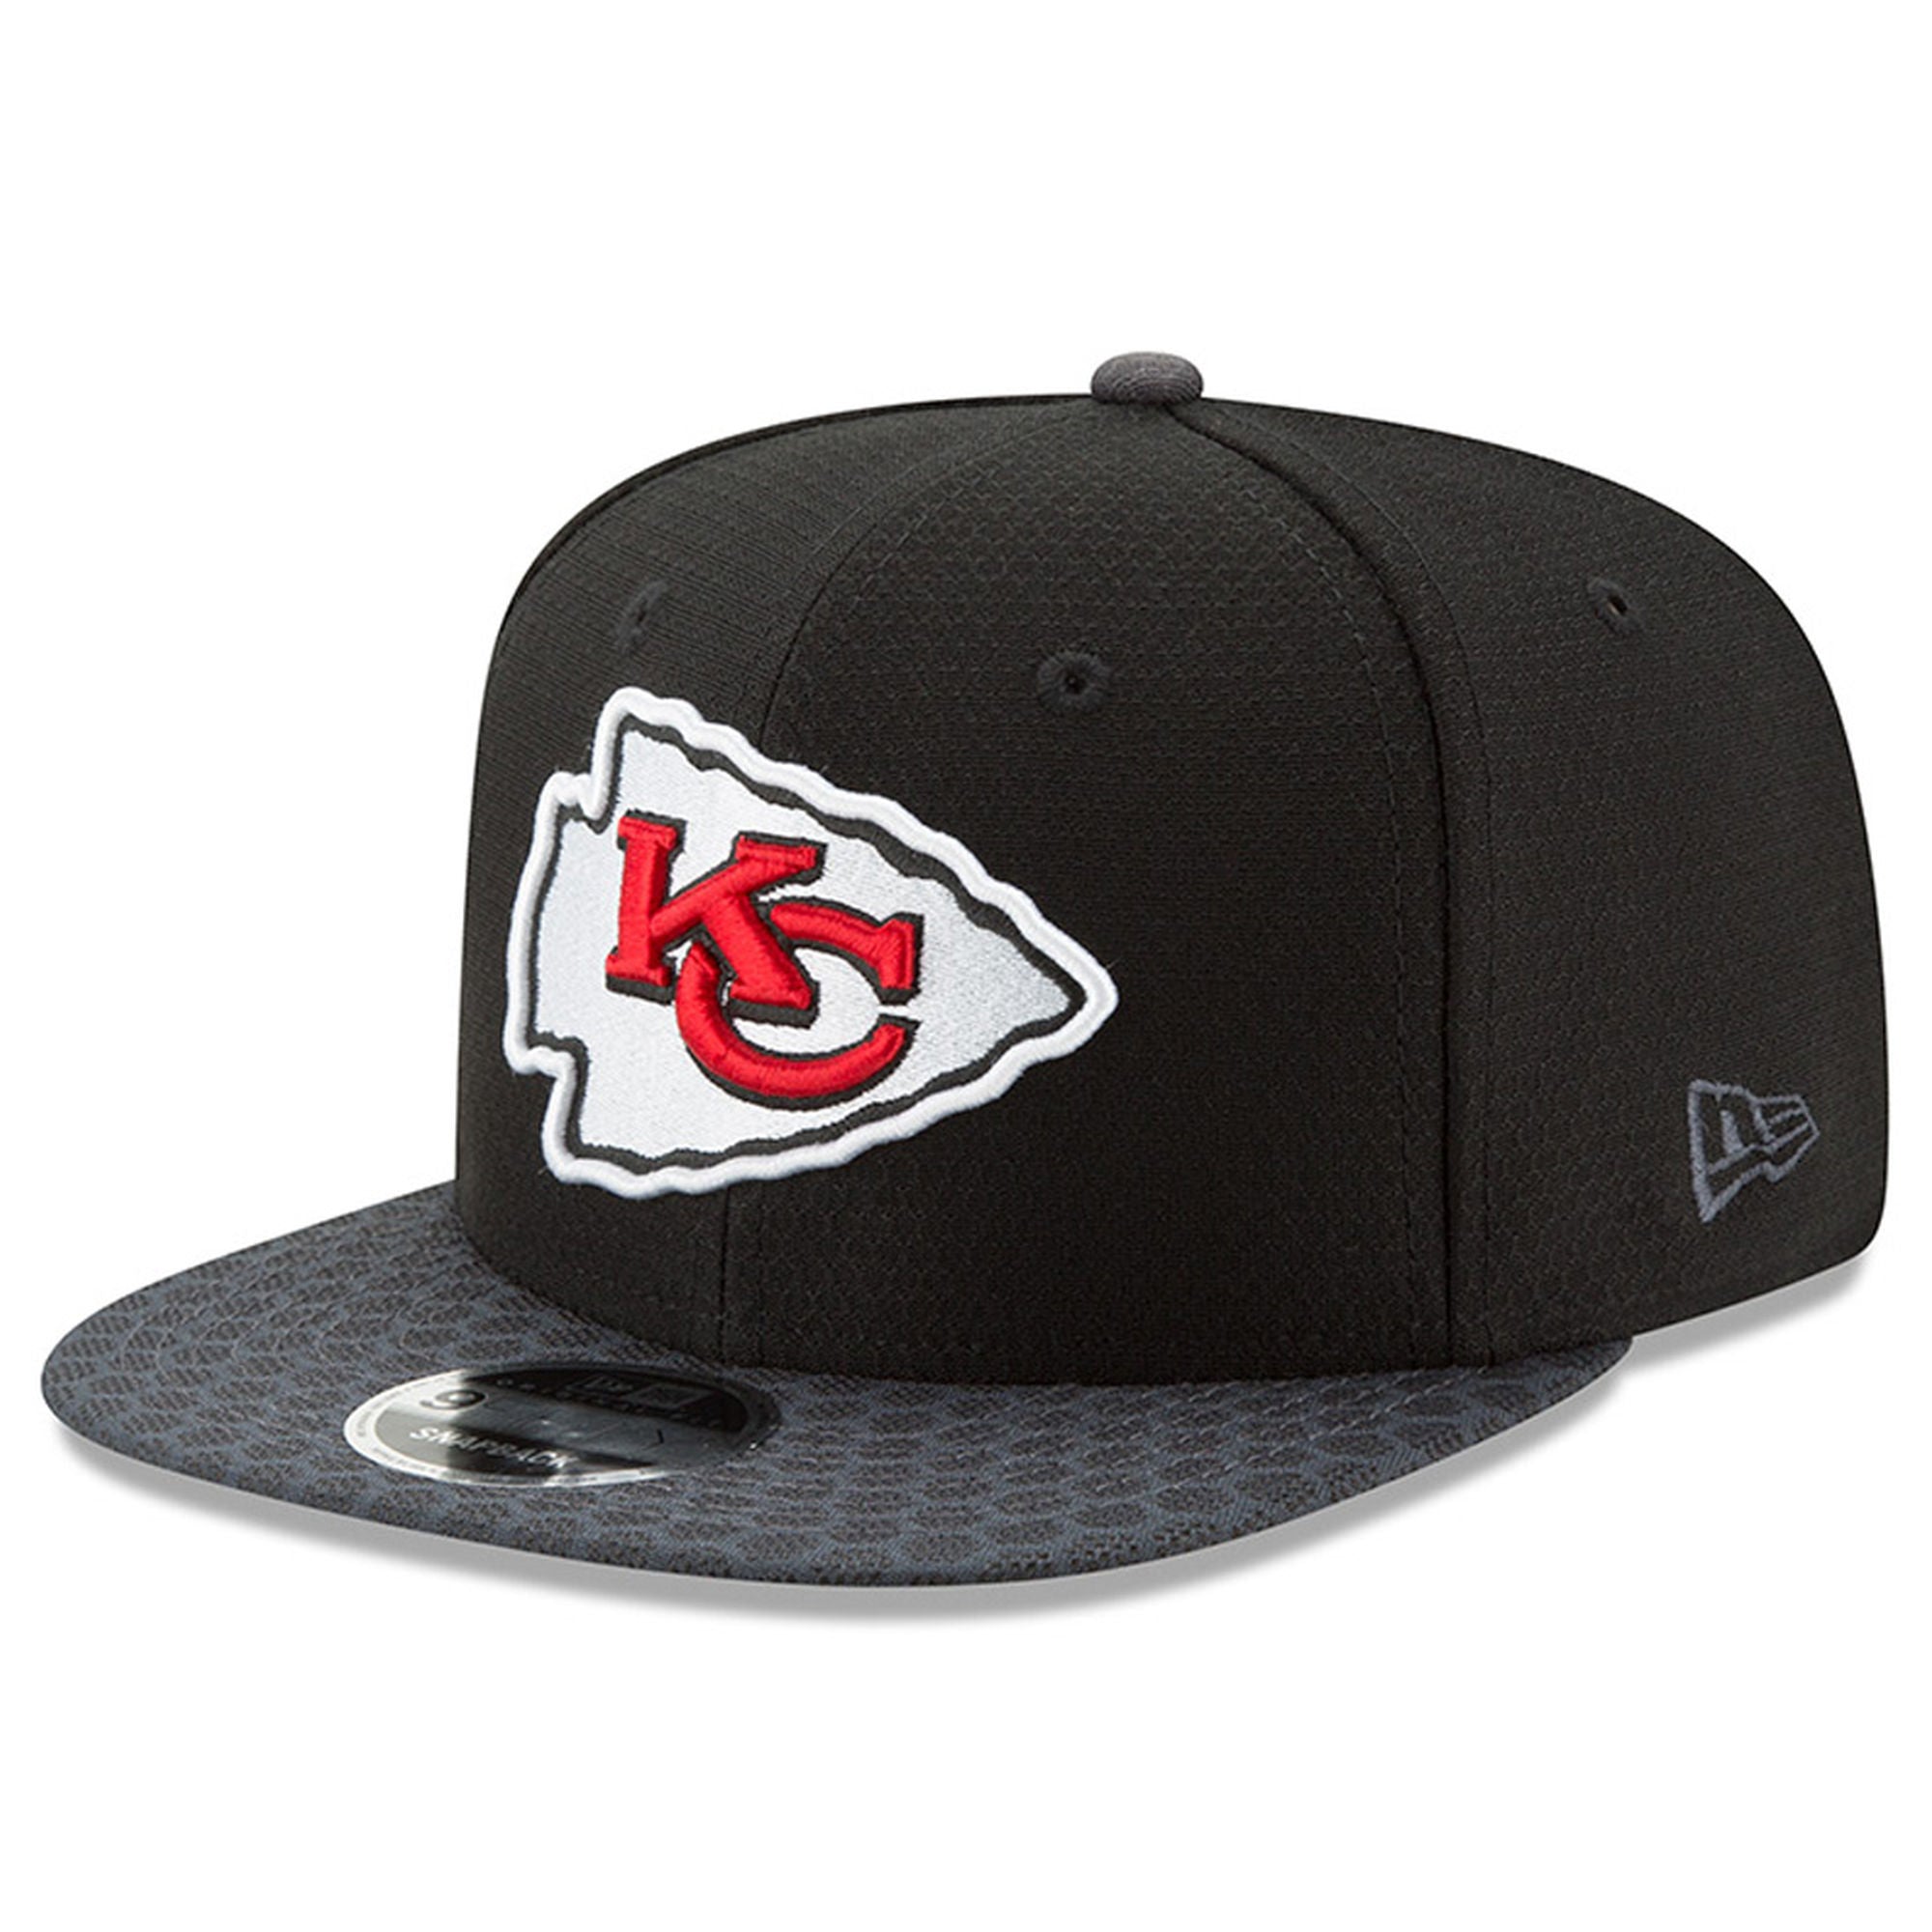 Kansas City Chiefs 2017 NFL Sideline Adjustable 9FIFTY Snapback Hat by